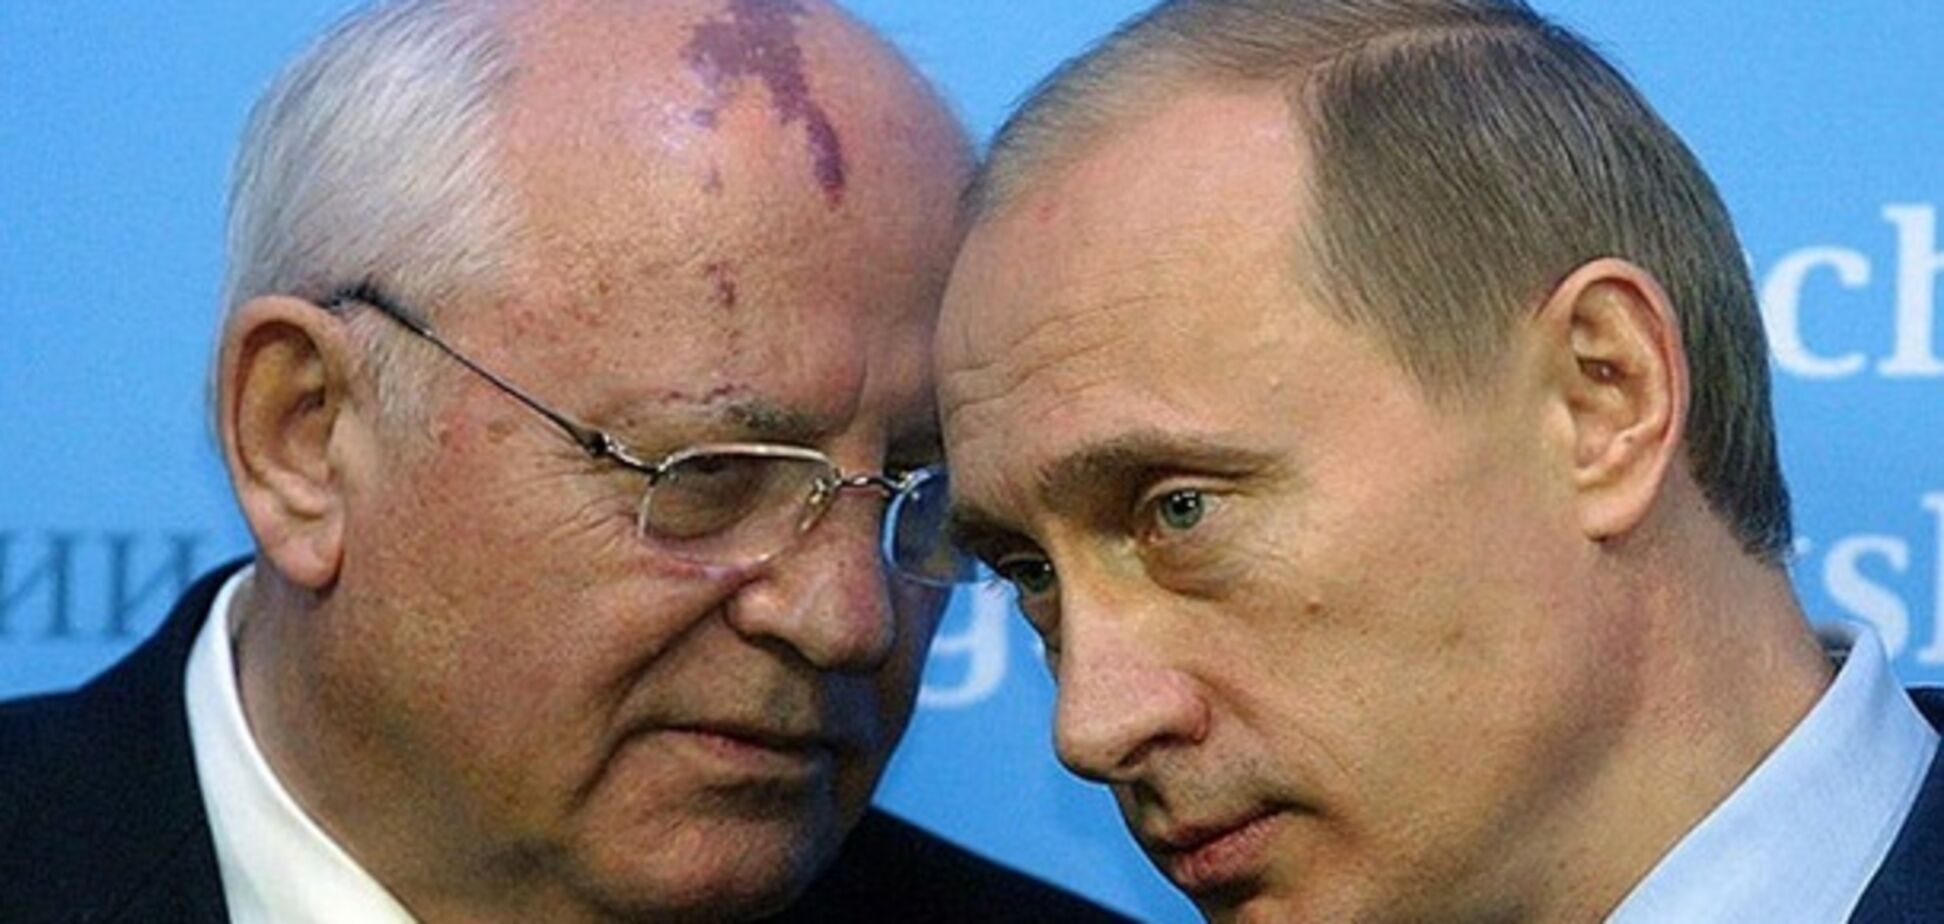 Горбачев и Путин